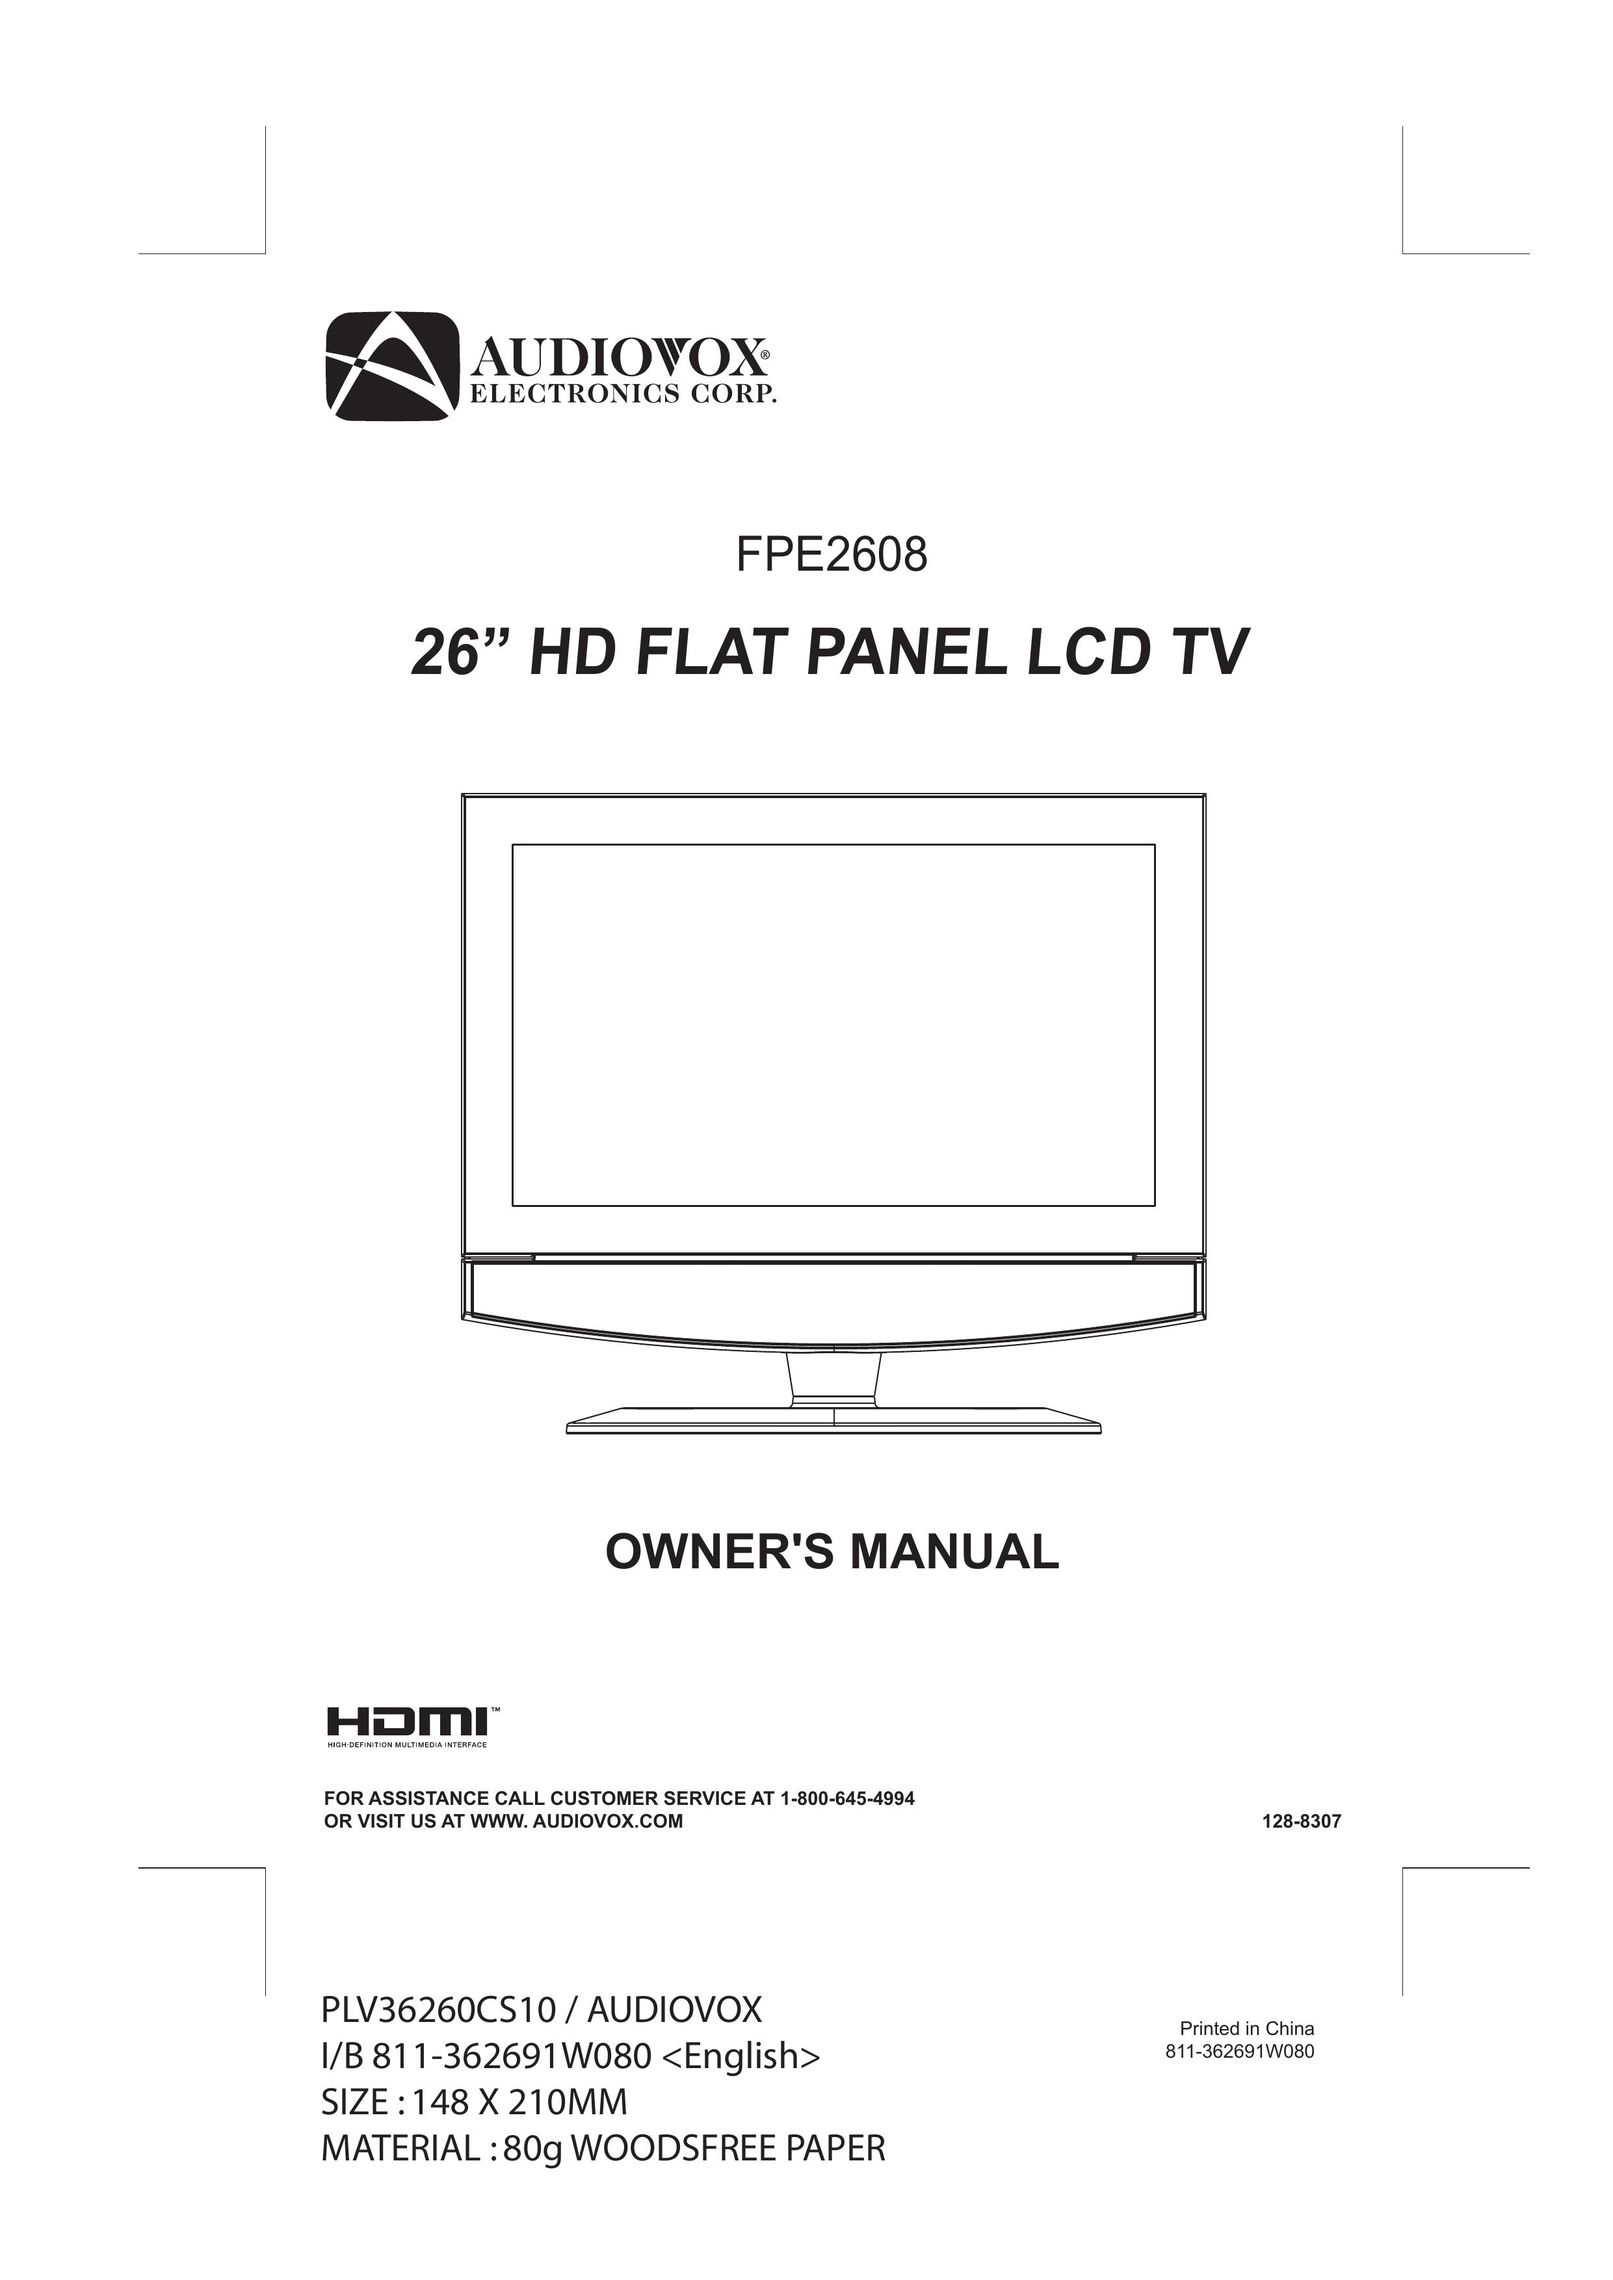 Audiovox FPE2608 Flat Panel Television User Manual